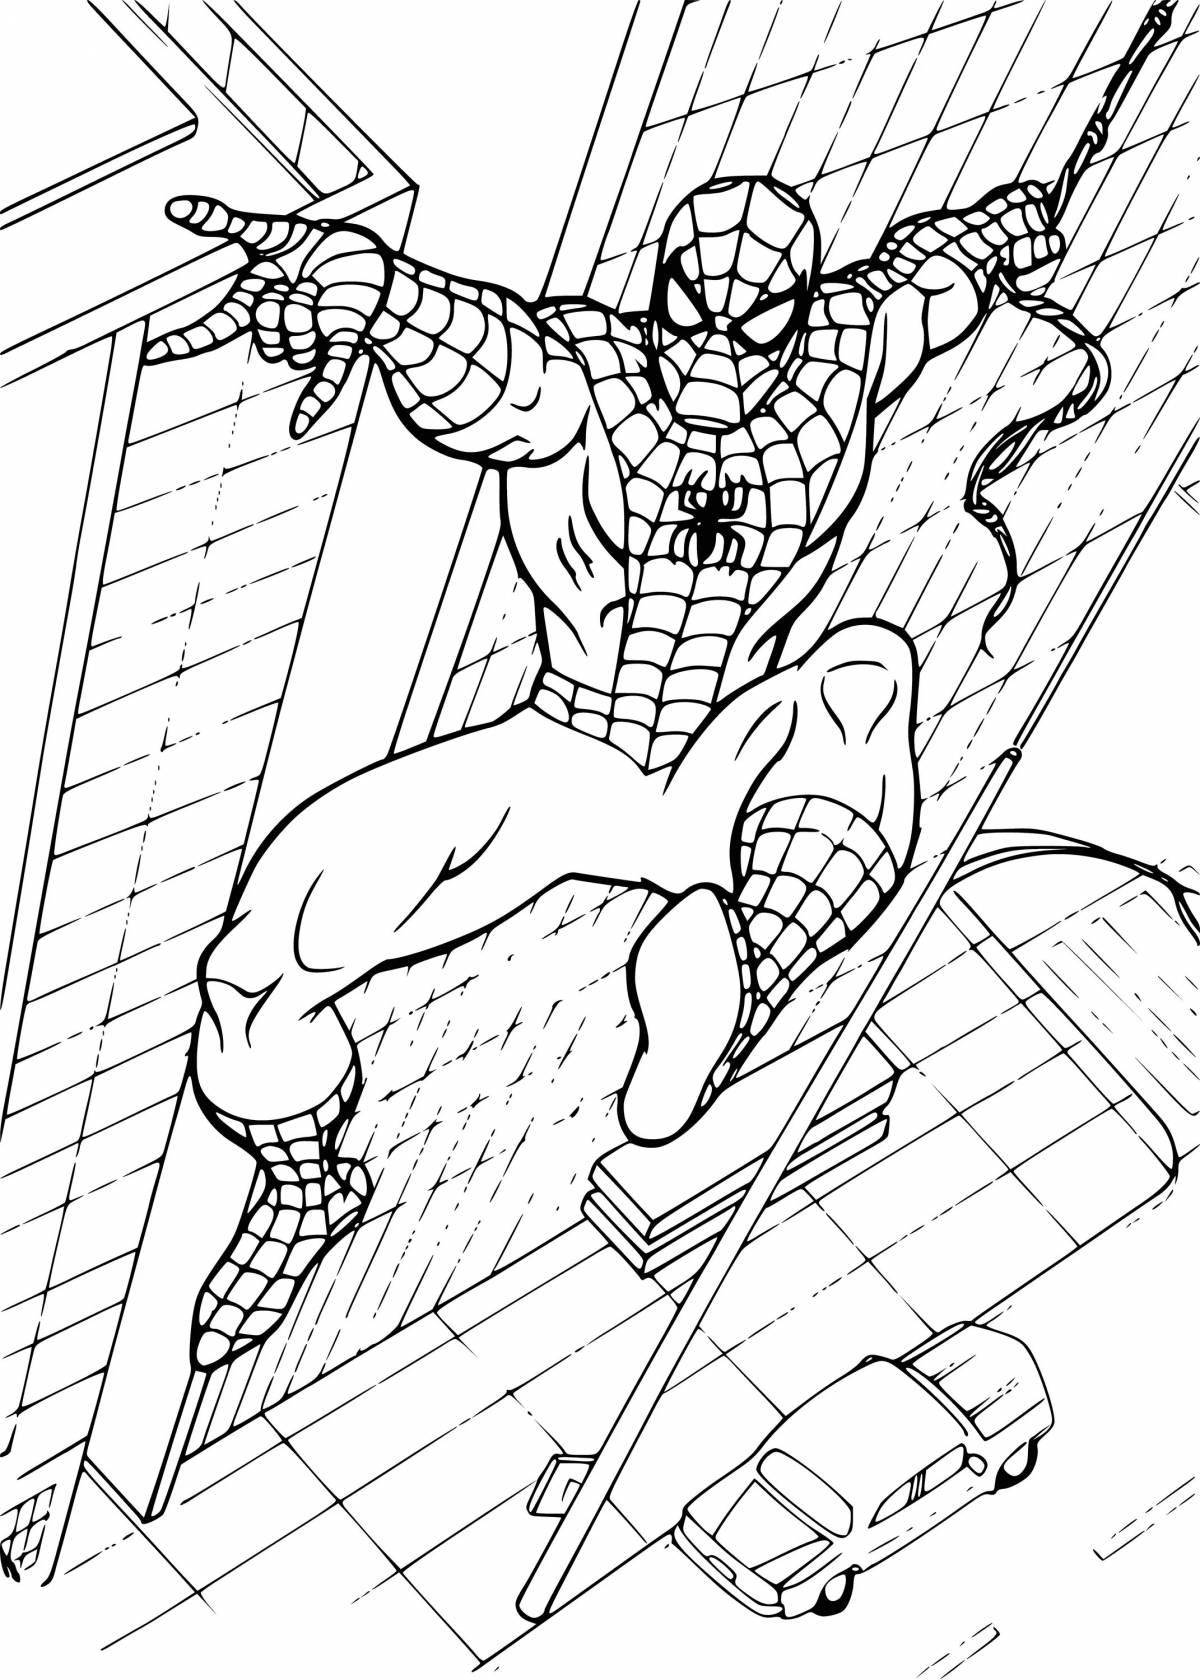 Spiderman's amazing anti-stress coloring book